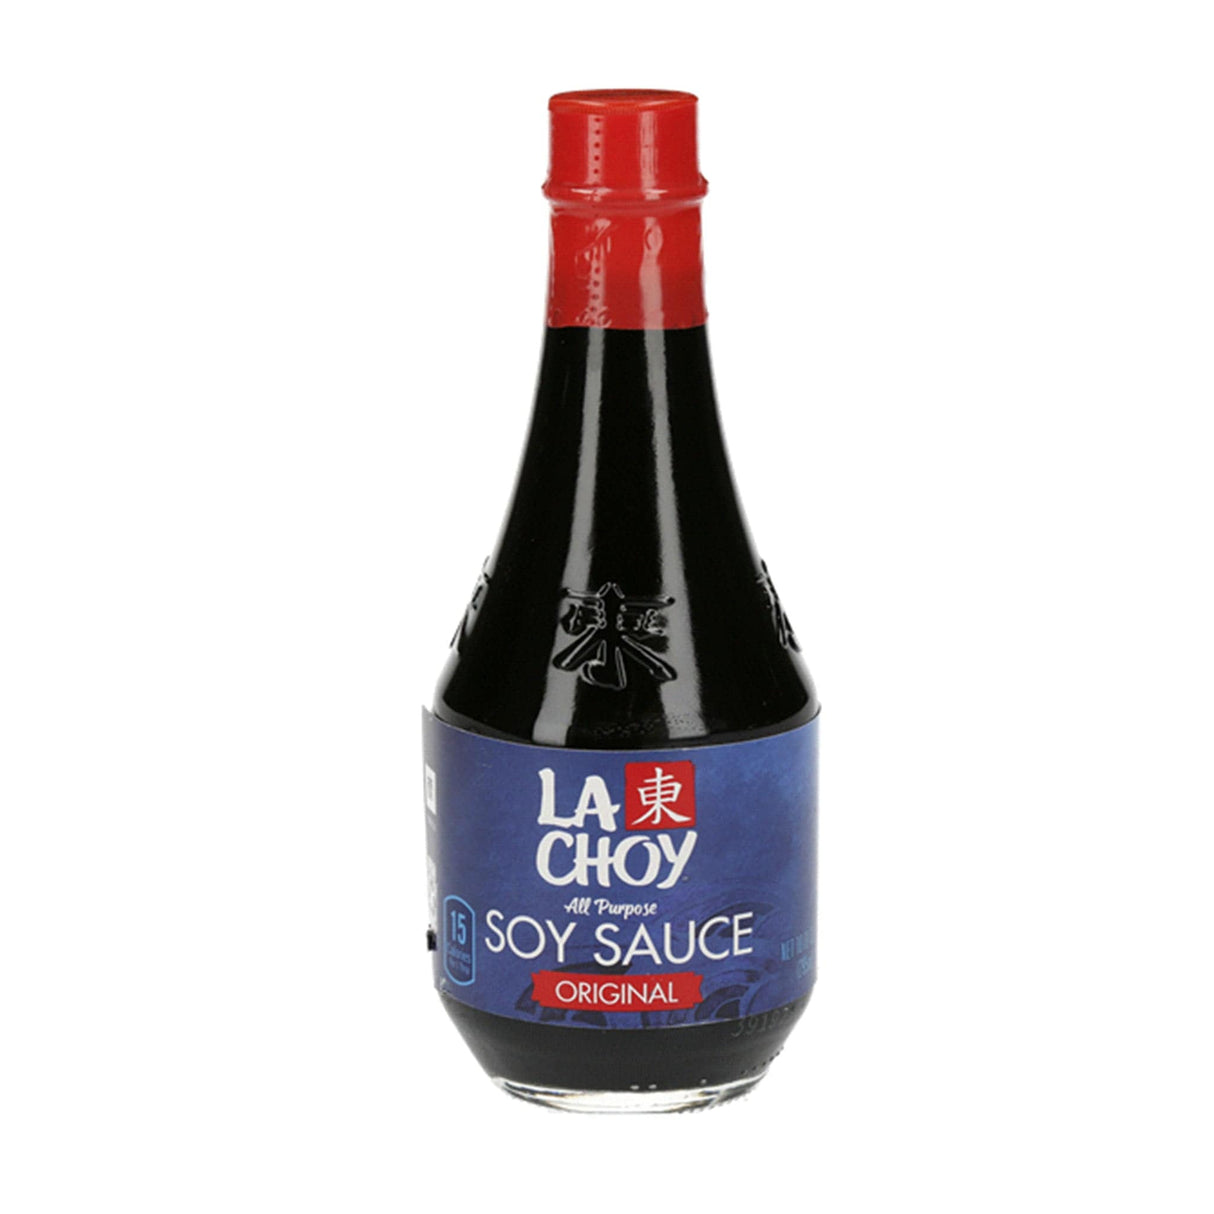 La Choy Soy Sauce Original